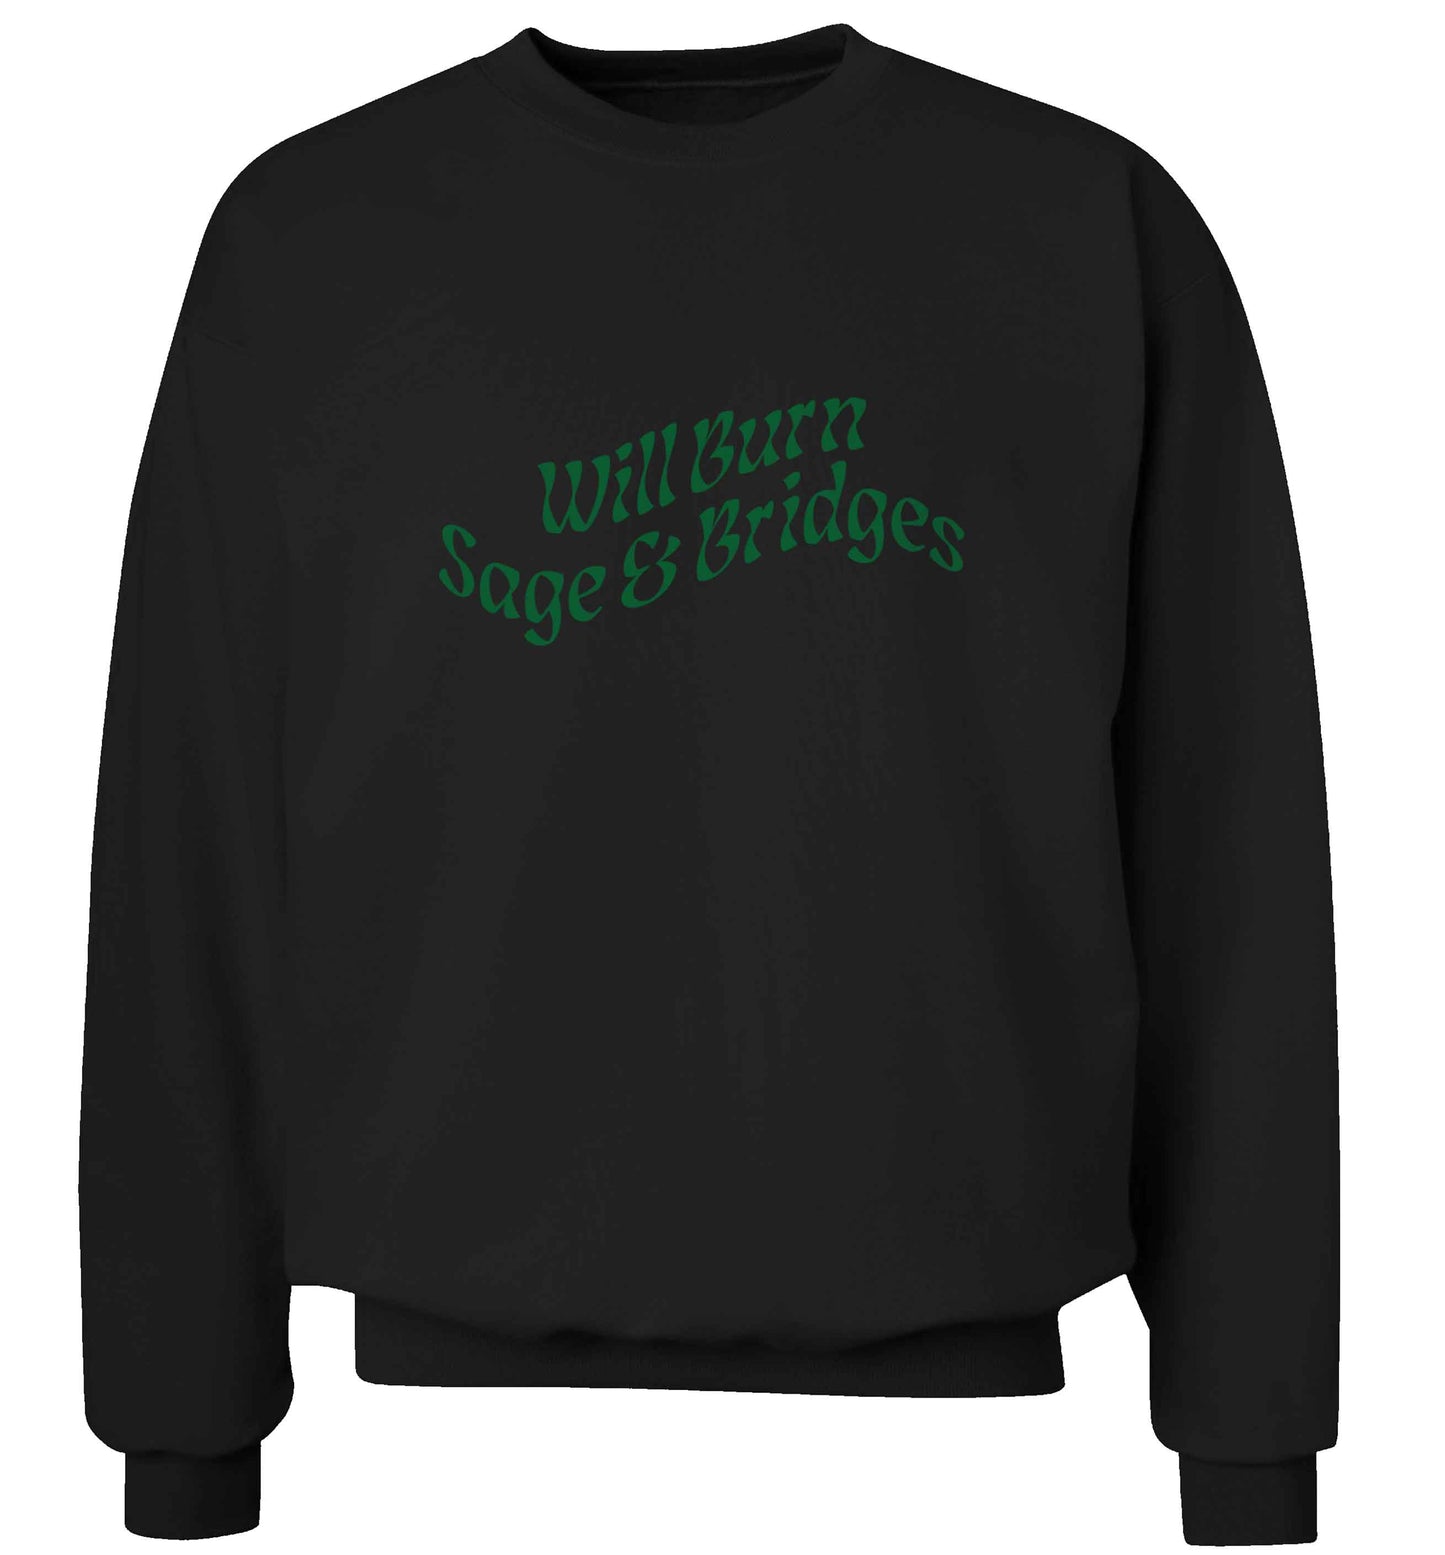 Will burn bridges and sage adult's unisex black sweater 2XL